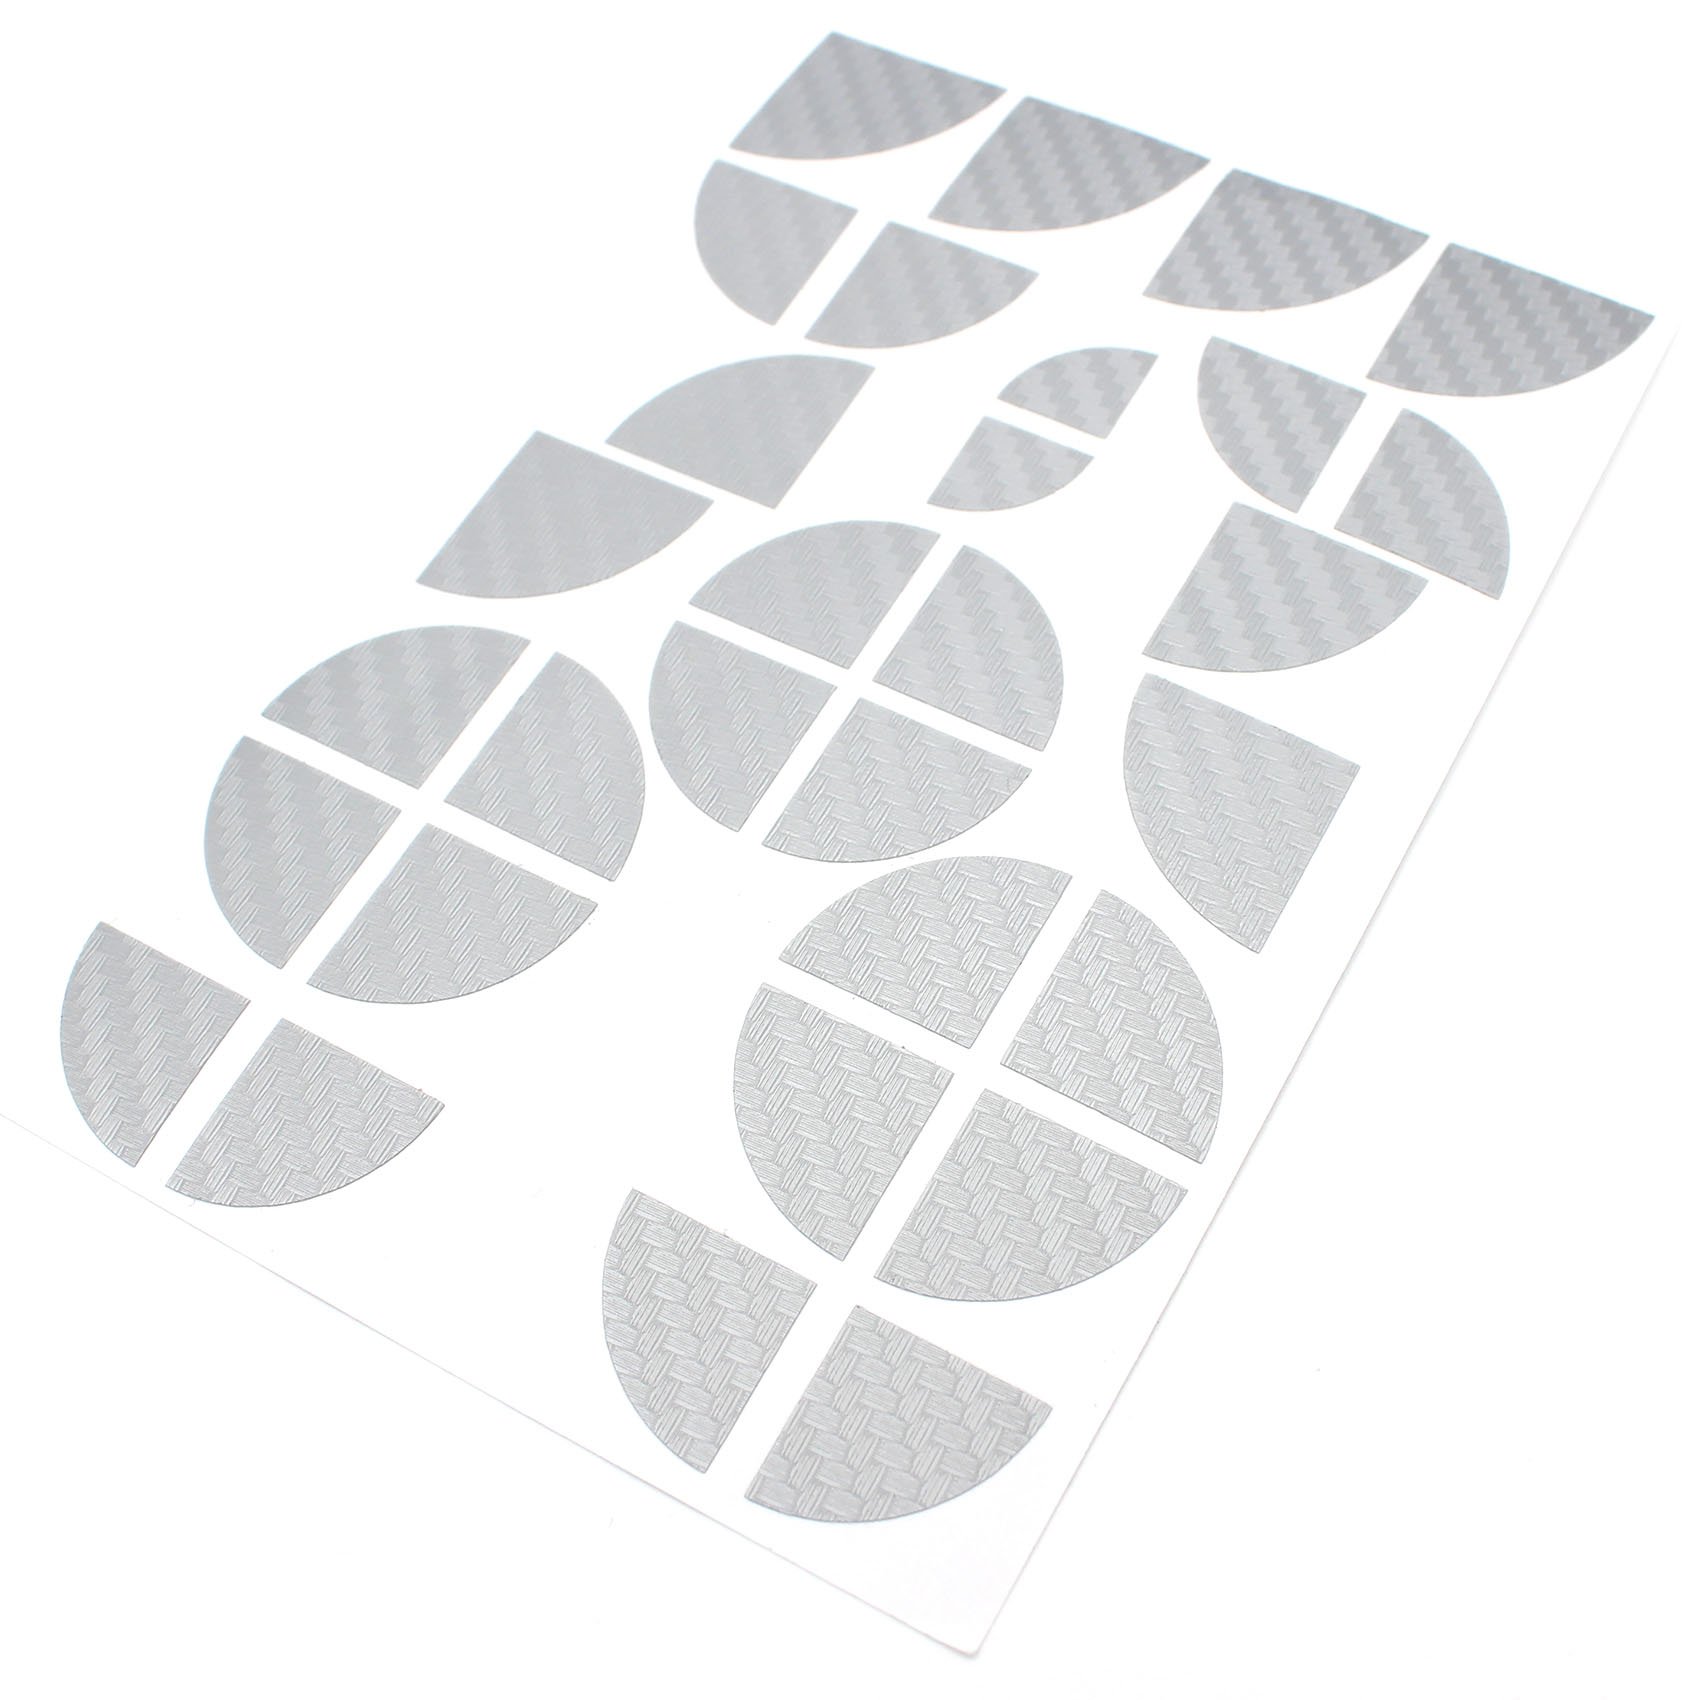 Finest Folia 4D Carbonfolie Emblem Ecken Aufkleber (K004 Anthrazit) von Finest Folia